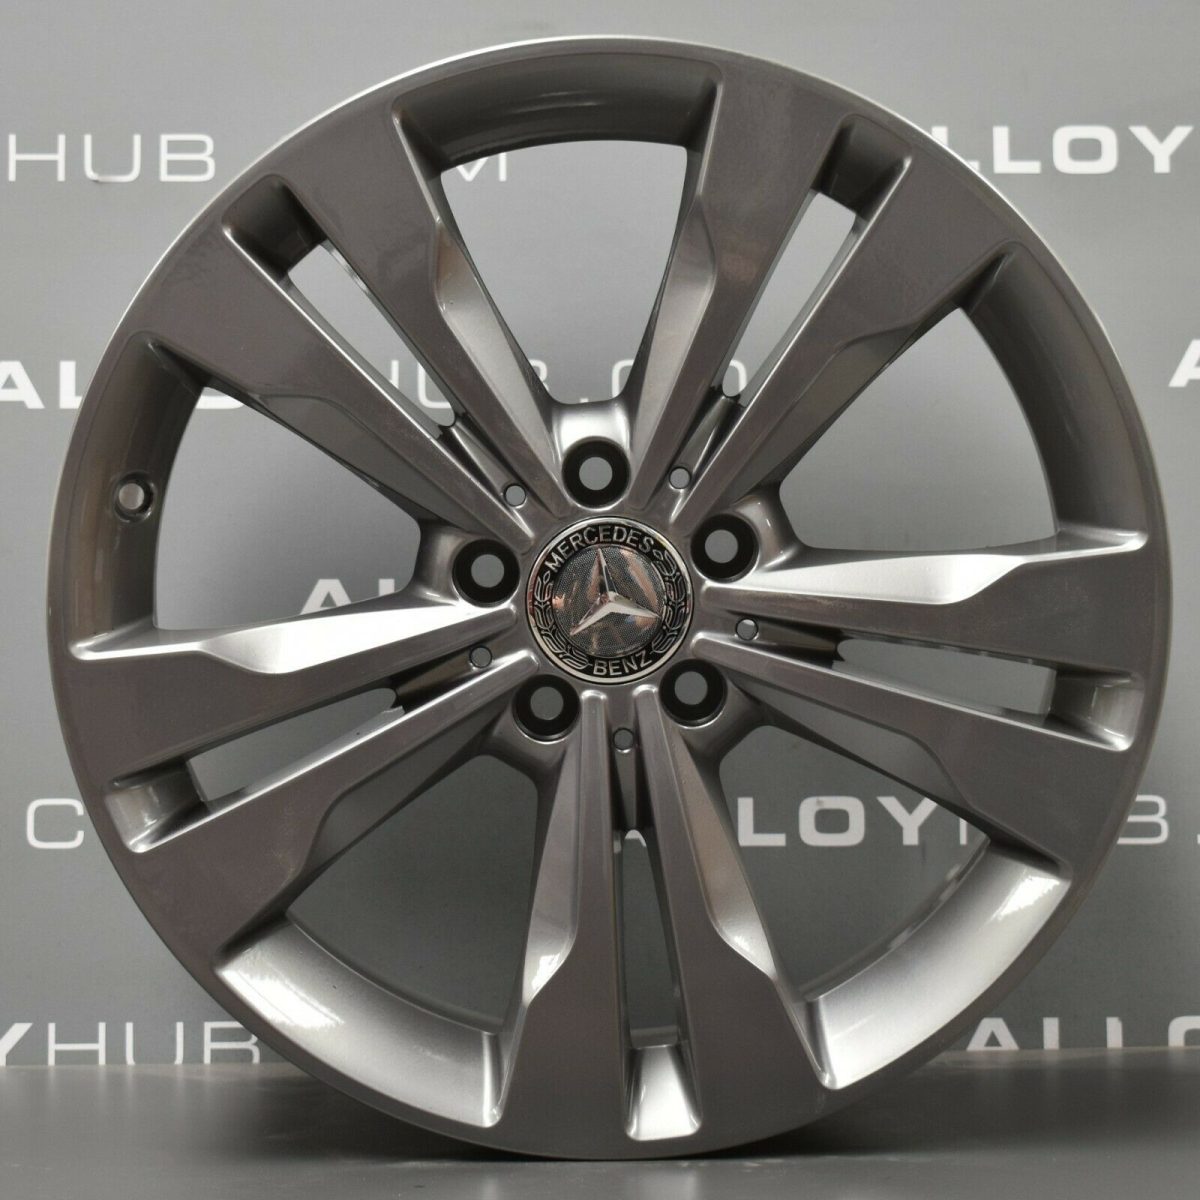 Genuine Mercedes-Benz A/B Class W176 W246 5 Twin Spoke 18" inch Alloy Wheels with Grey & Anthracite Grey Finish A24640104007756